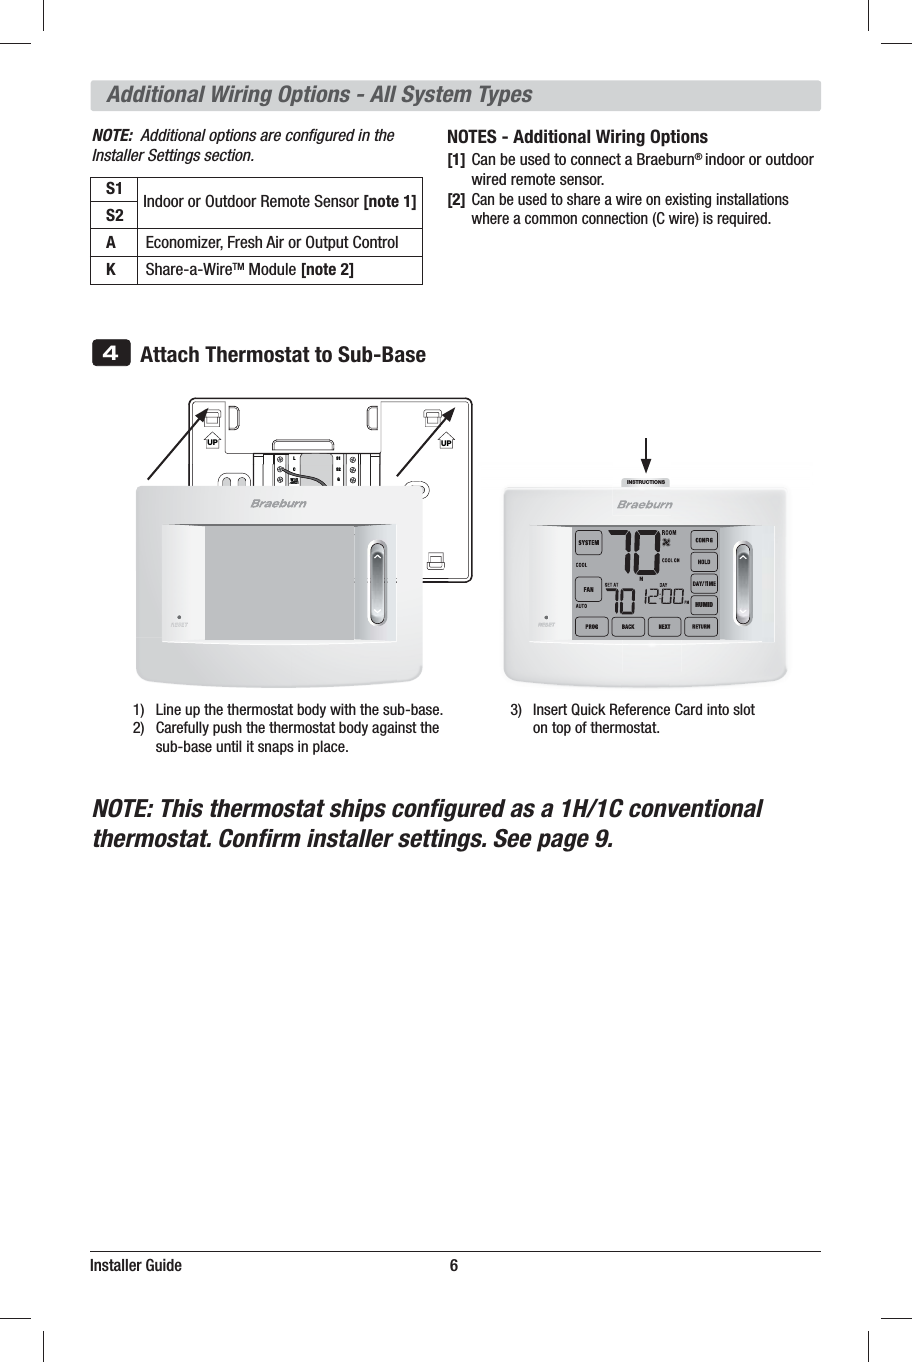 INSTRUCTIONSHUMIDInstaller Guide                                                                   6NOTE: This thermostat ships conﬁgured as a 1H/1C conventional thermostat. Conﬁrm installer settings. See page 9.UP UPS1S2GY1Y2AHLCW1/E/AUX1W2/AUX2W3/O/BRHRCCW1/E/AUX1S2G4Attach Thermostat to Sub-Base *OTFSU2VJDL3FGFSFODF$BSEJOUPTMPU POUPQPGUIFSNPTUBU -JOFVQUIFUIFSNPTUBUCPEZXJUIUIFTVCCBTF $BSFGVMMZQVTIUIFUIFSNPTUBUCPEZBHBJOTUUIF TVCCBTFVOUJMJUTOBQTJOQMBDFNOTE:  Additional options are conﬁgured in the Installer Settings section. S1  S2  A  &amp;DPOPNJ[FS&apos;SFTI&quot;JSPS0VUQVU$POUSPM  K 4IBSFB8JSF5..PEVMF[note 2]NOTES - Additional Wiring Options[1]$BOCFVTFEUPDPOOFDUB#SBFCVSO® JOEPPSPSPVUEPPS XJSFESFNPUFTFOTPS[2] $BOCFVTFEUPTIBSFBXJSFPOFYJTUJOHJOTUBMMBUJPOT XIFSFBDPNNPODPOOFDUJPO$XJSFJTSFRVJSFE&quot;EEJUJPOBM8JSJOH0QUJPOT&quot;MM4ZTUFN5ZQFT*OEPPSPS0VUEPPS3FNPUF4FOTPS[note 1]